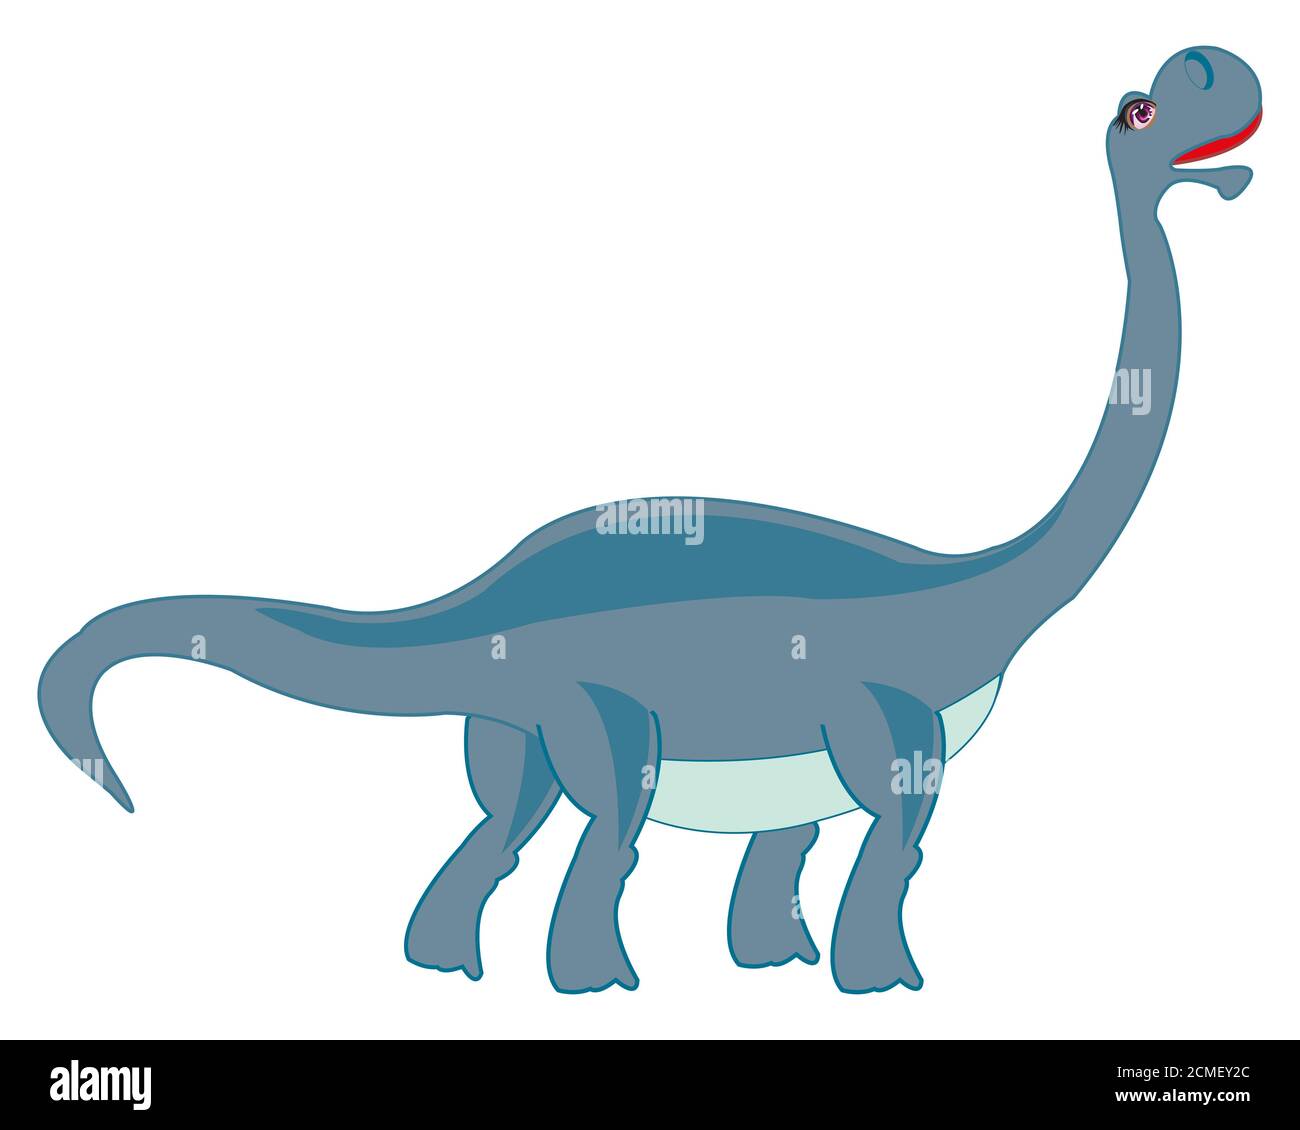 Big herbivorous dinosaur Stock Photo